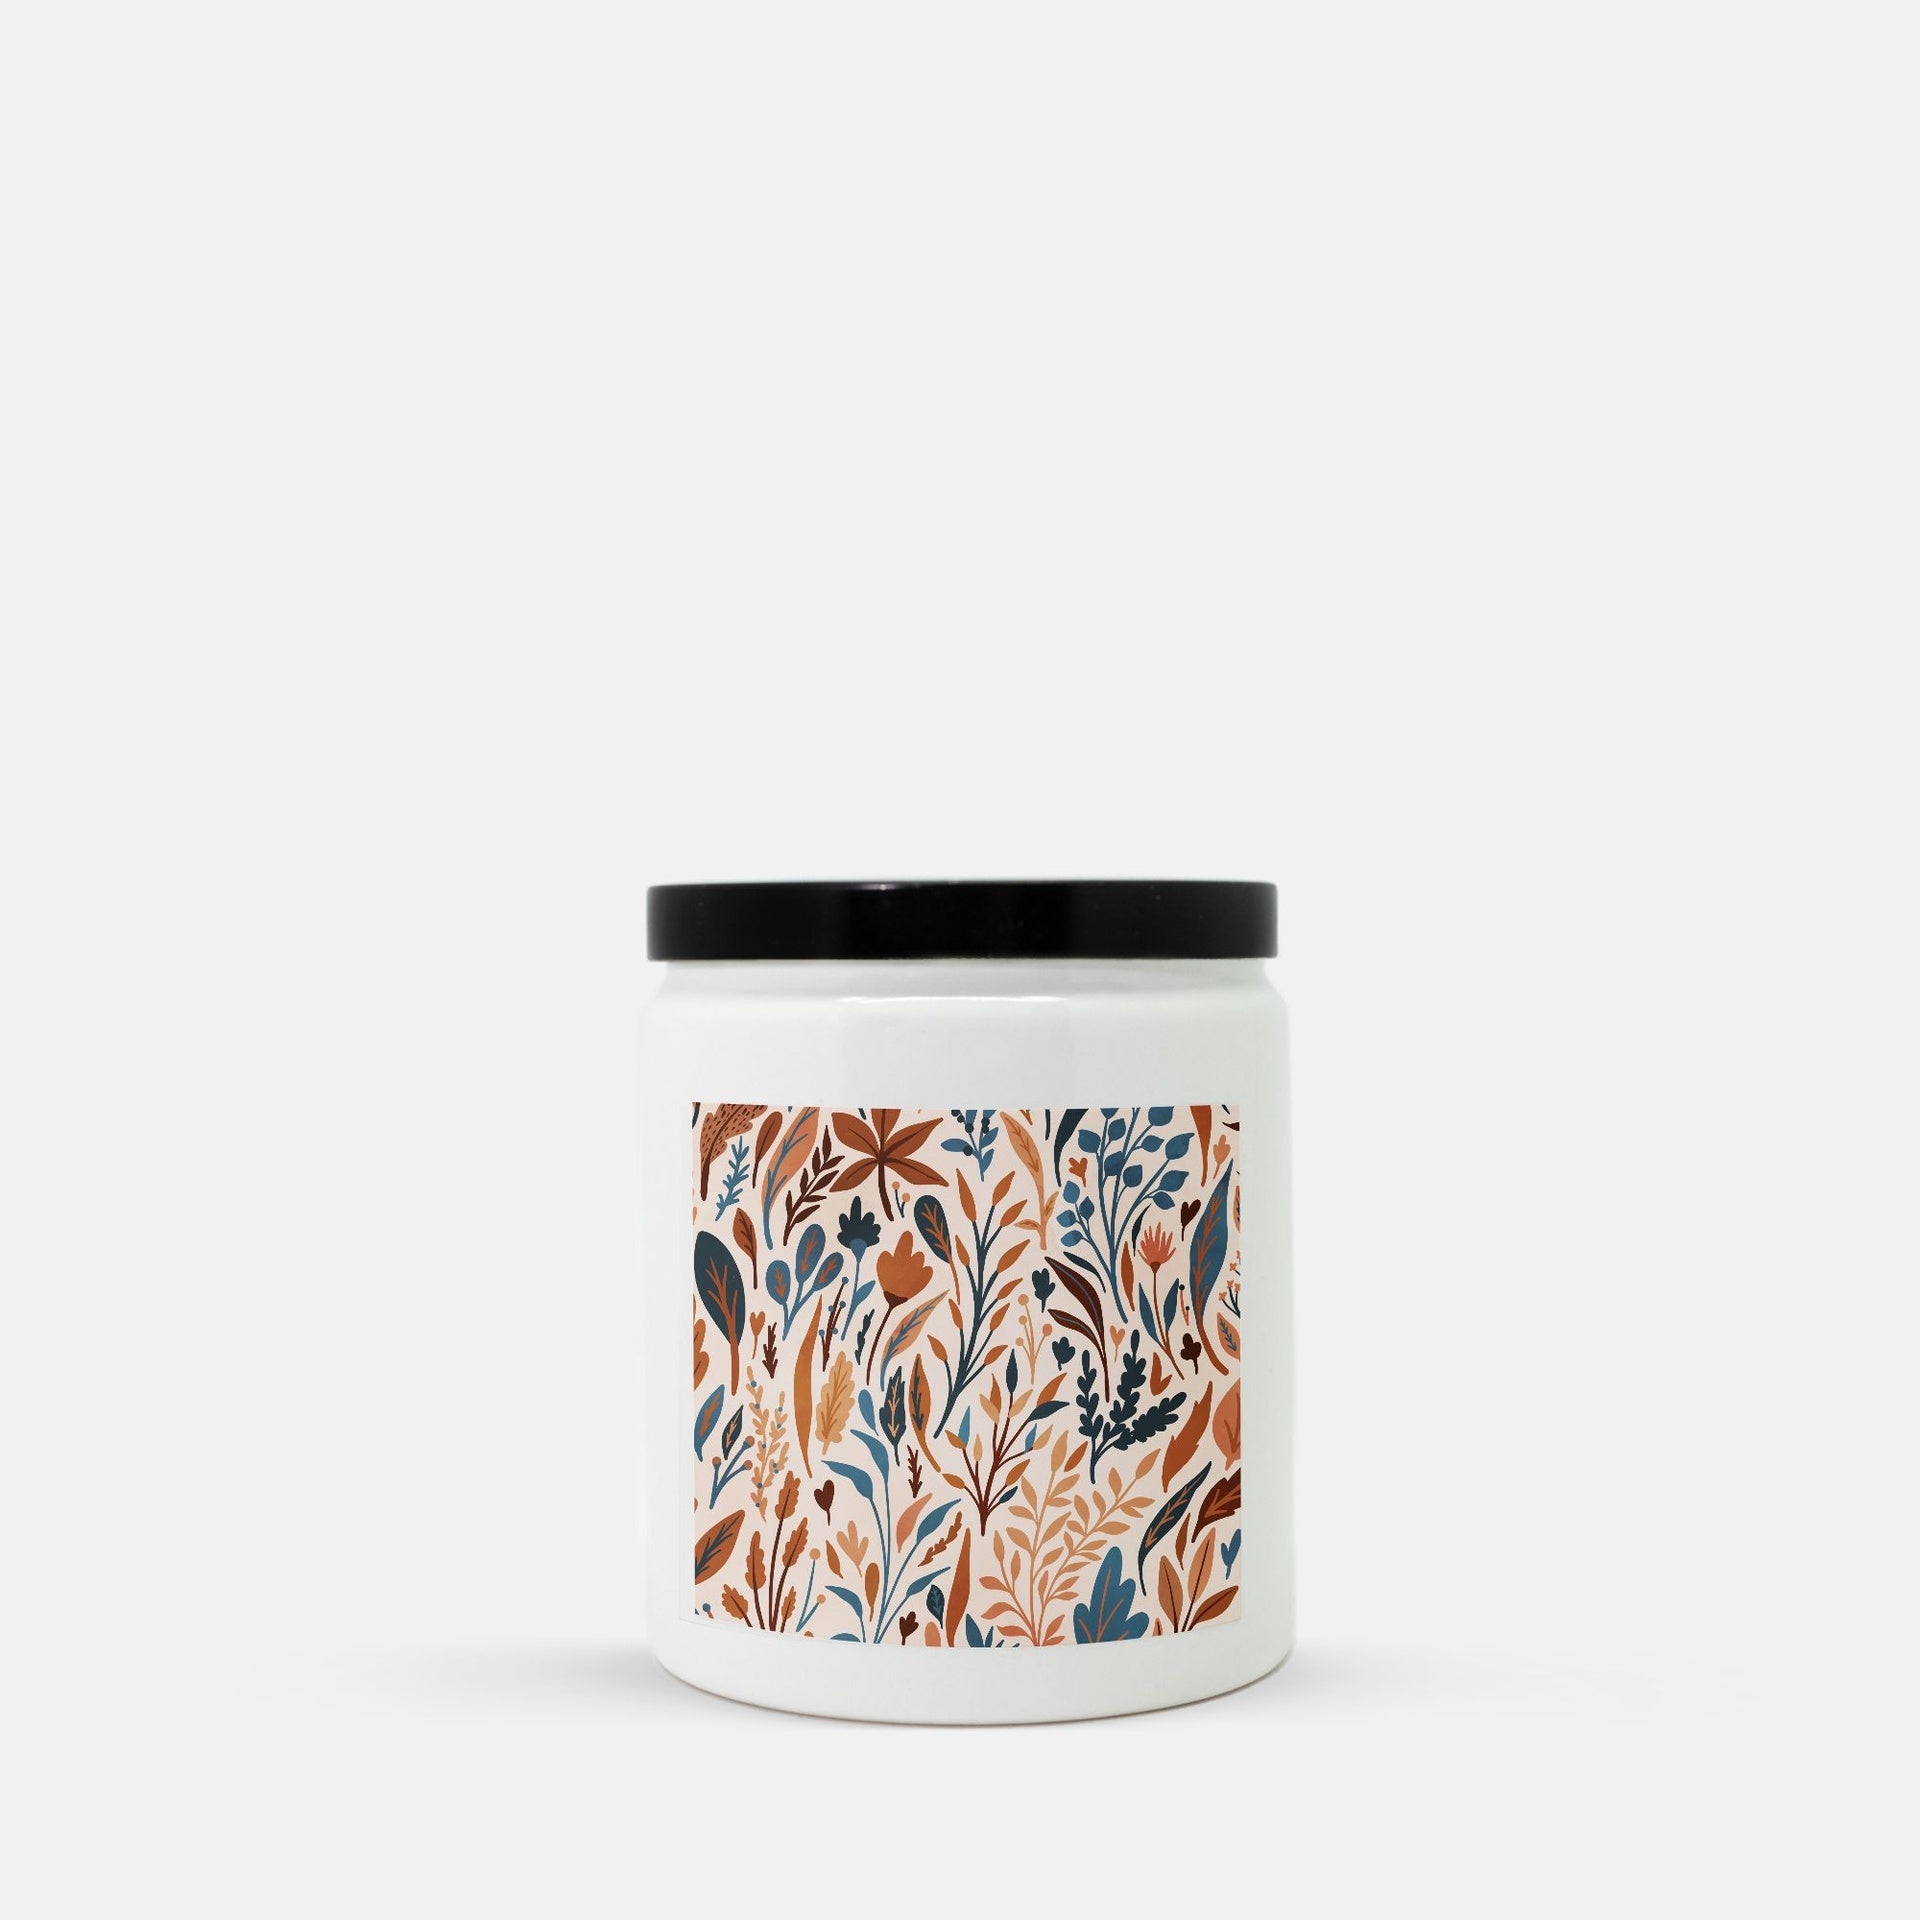 Lifestyle Details - Colorful Autumn Leaves Ceramic Candle w Black Lid - Macintosh